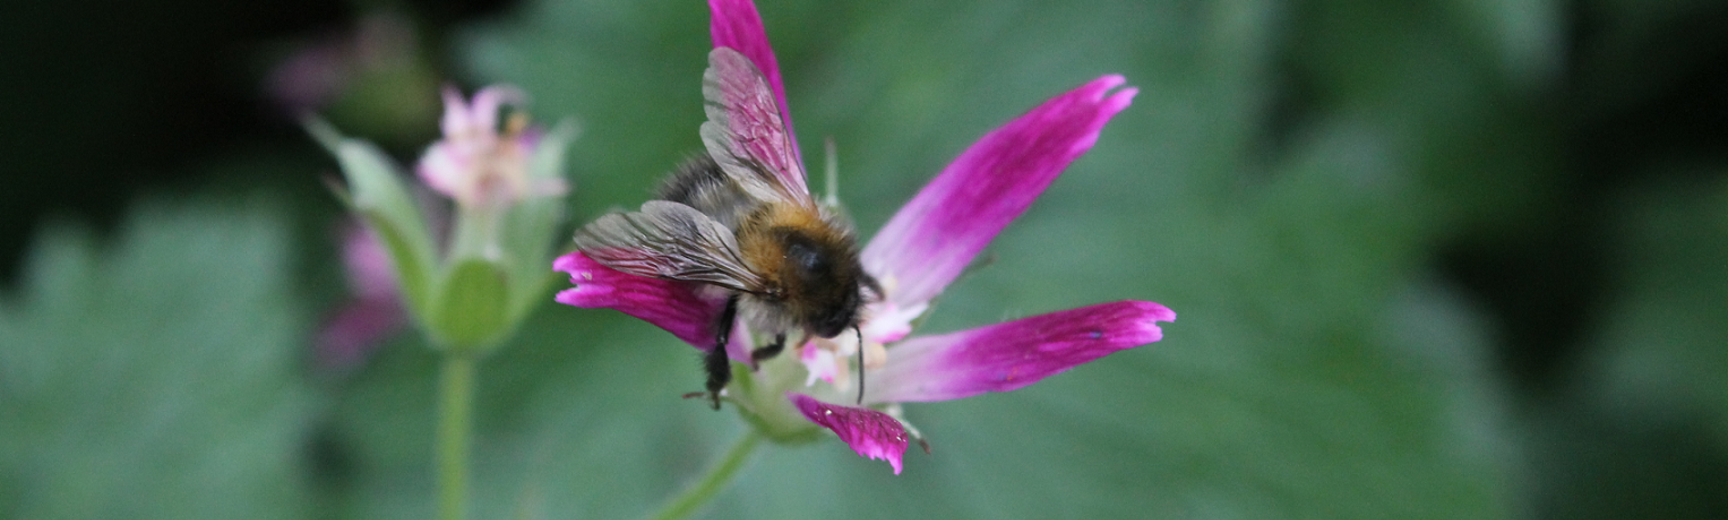 Bee on pink flower - photograph by Vikki Rose, Global Environmental Advisor (C Env MIEMA)